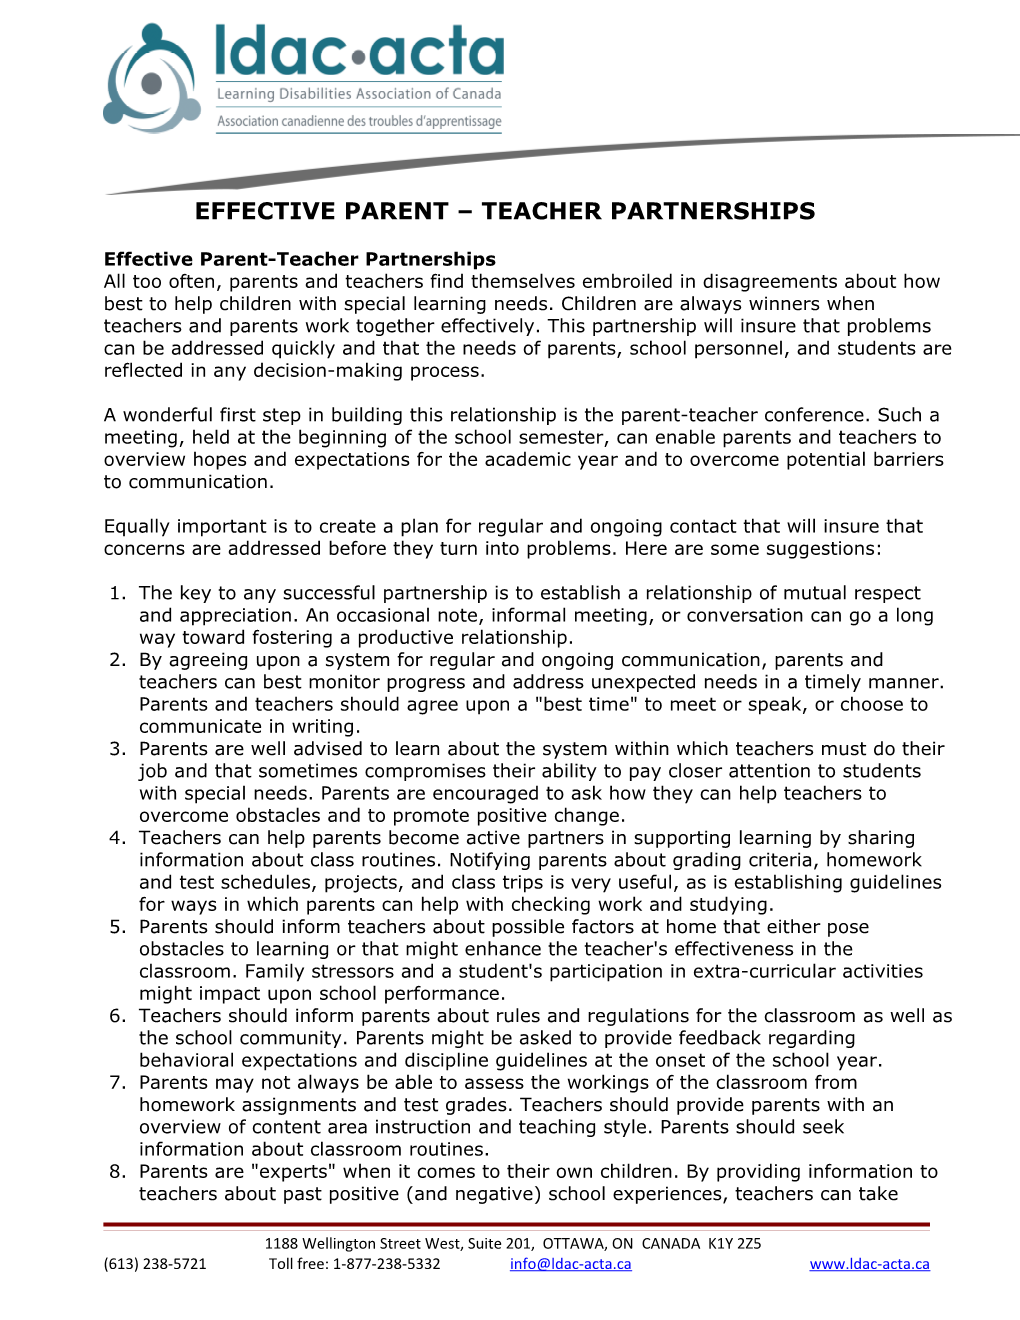 Effective Parent Teacher Partnerships